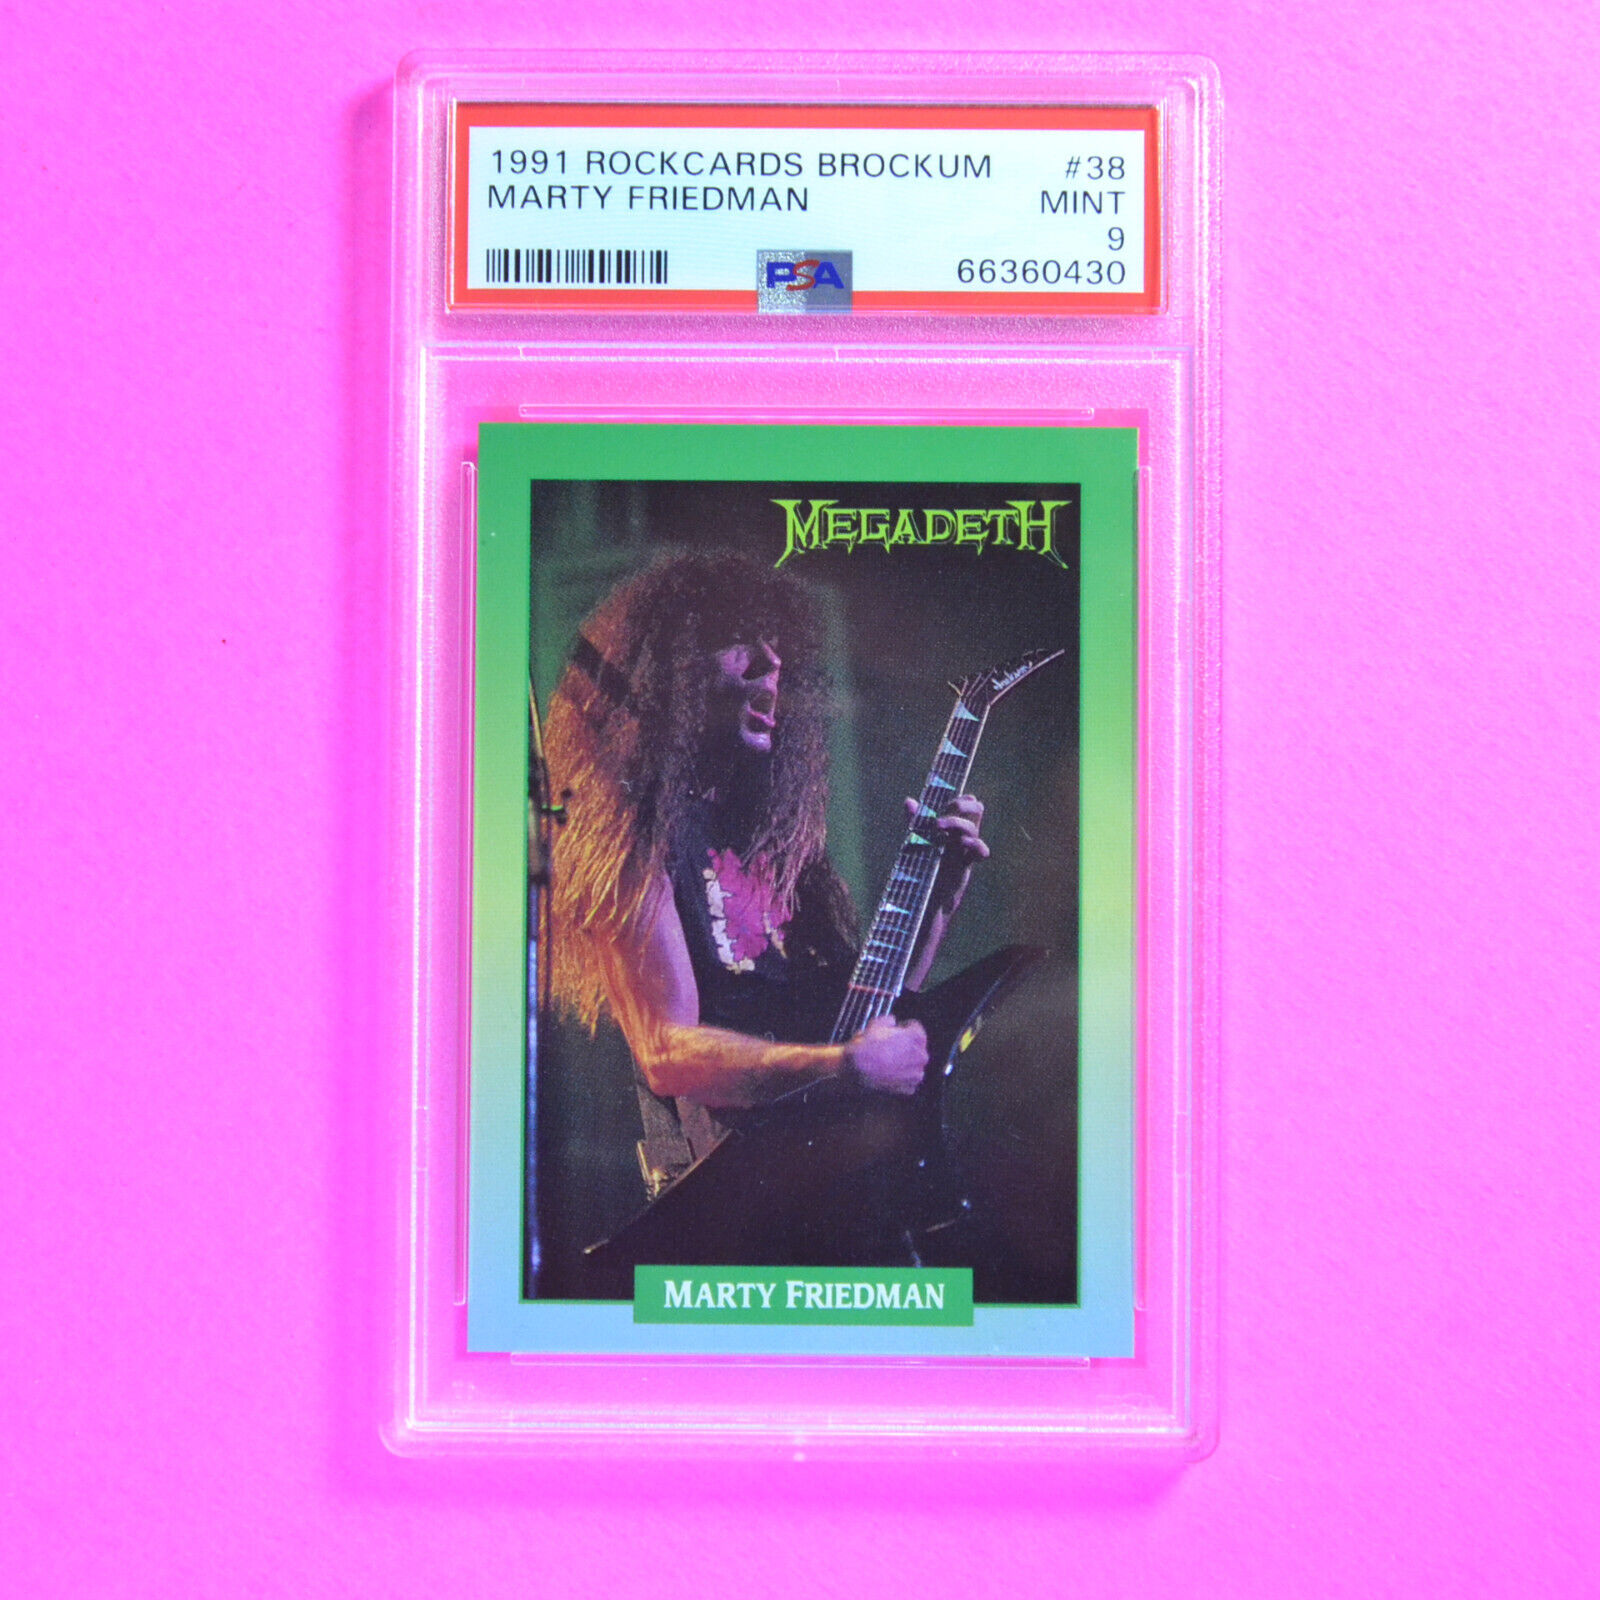 1991 RockCards Brockum, #38 Marty Friedman Megadeath Metal - PSA 9 Mint Rare